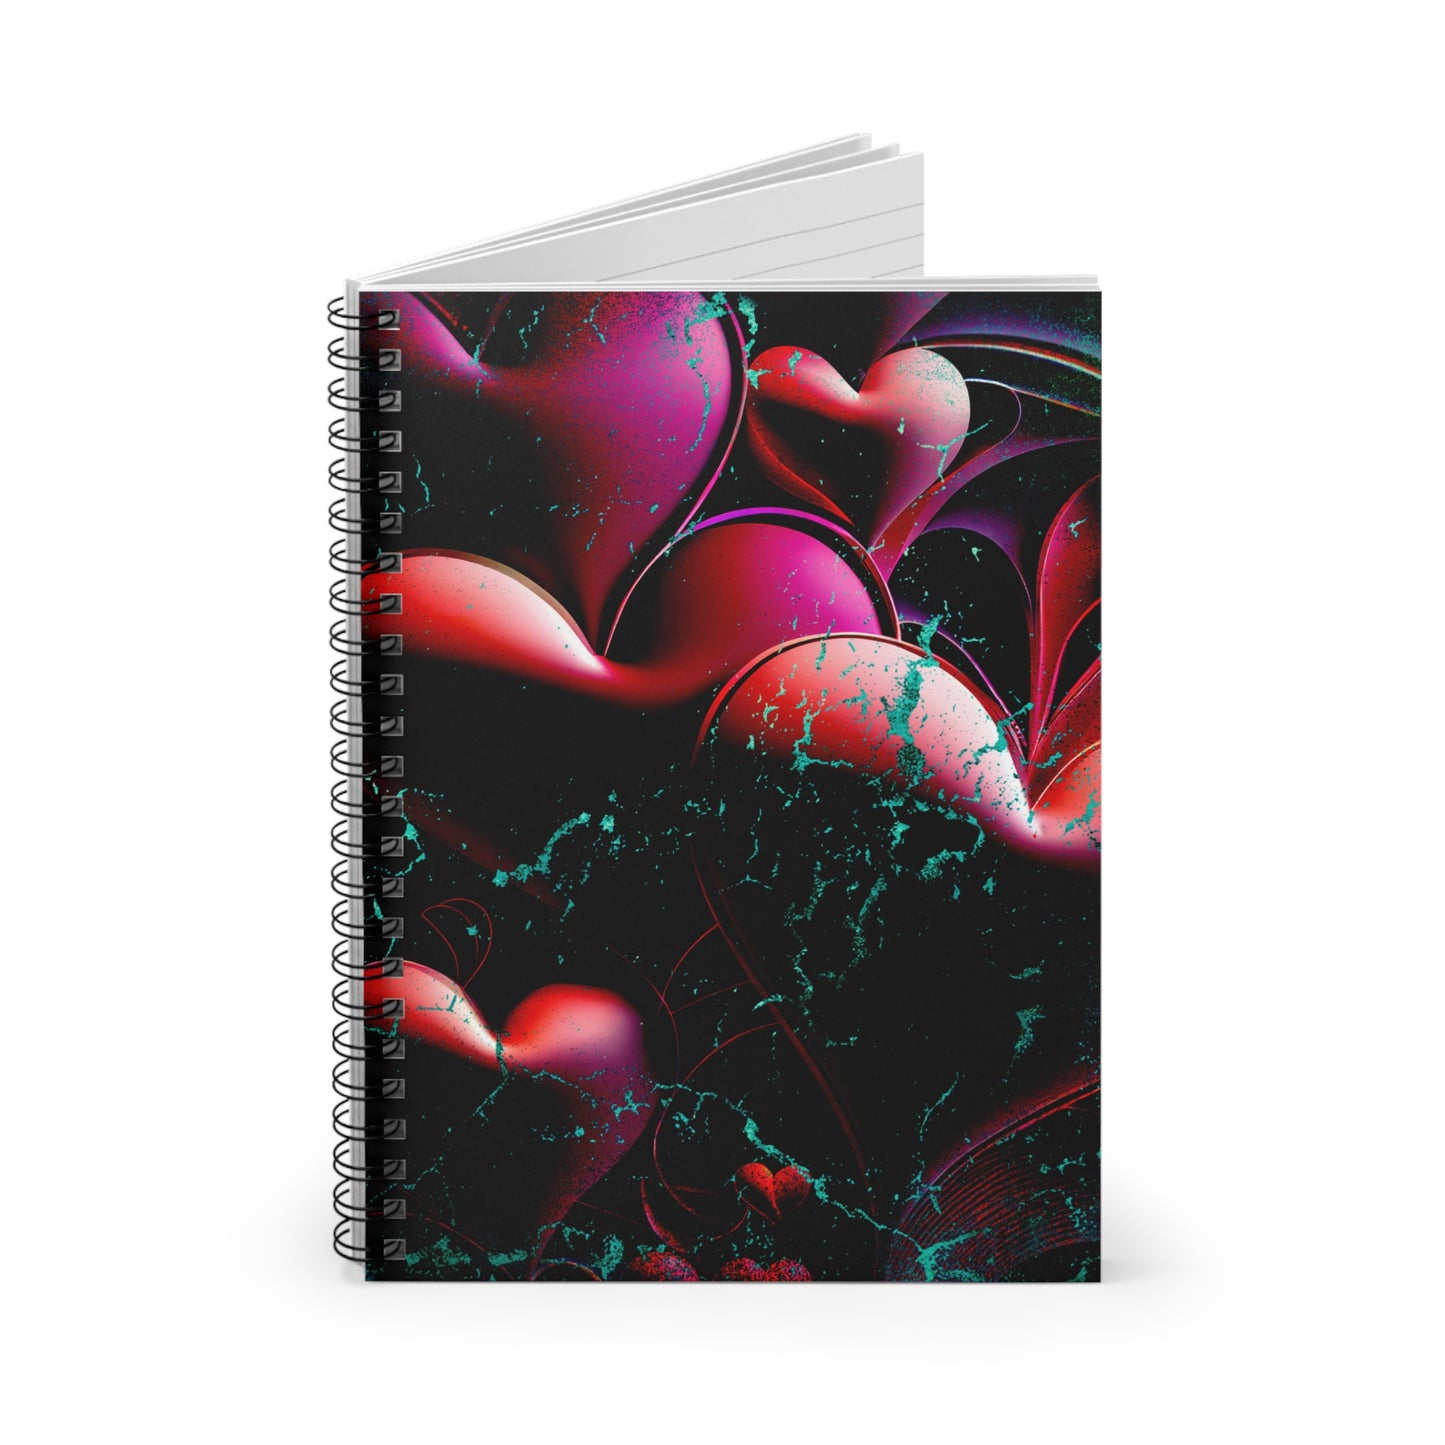 3D Hearts Valentine Spiral Journal Notebook - Ruled Line